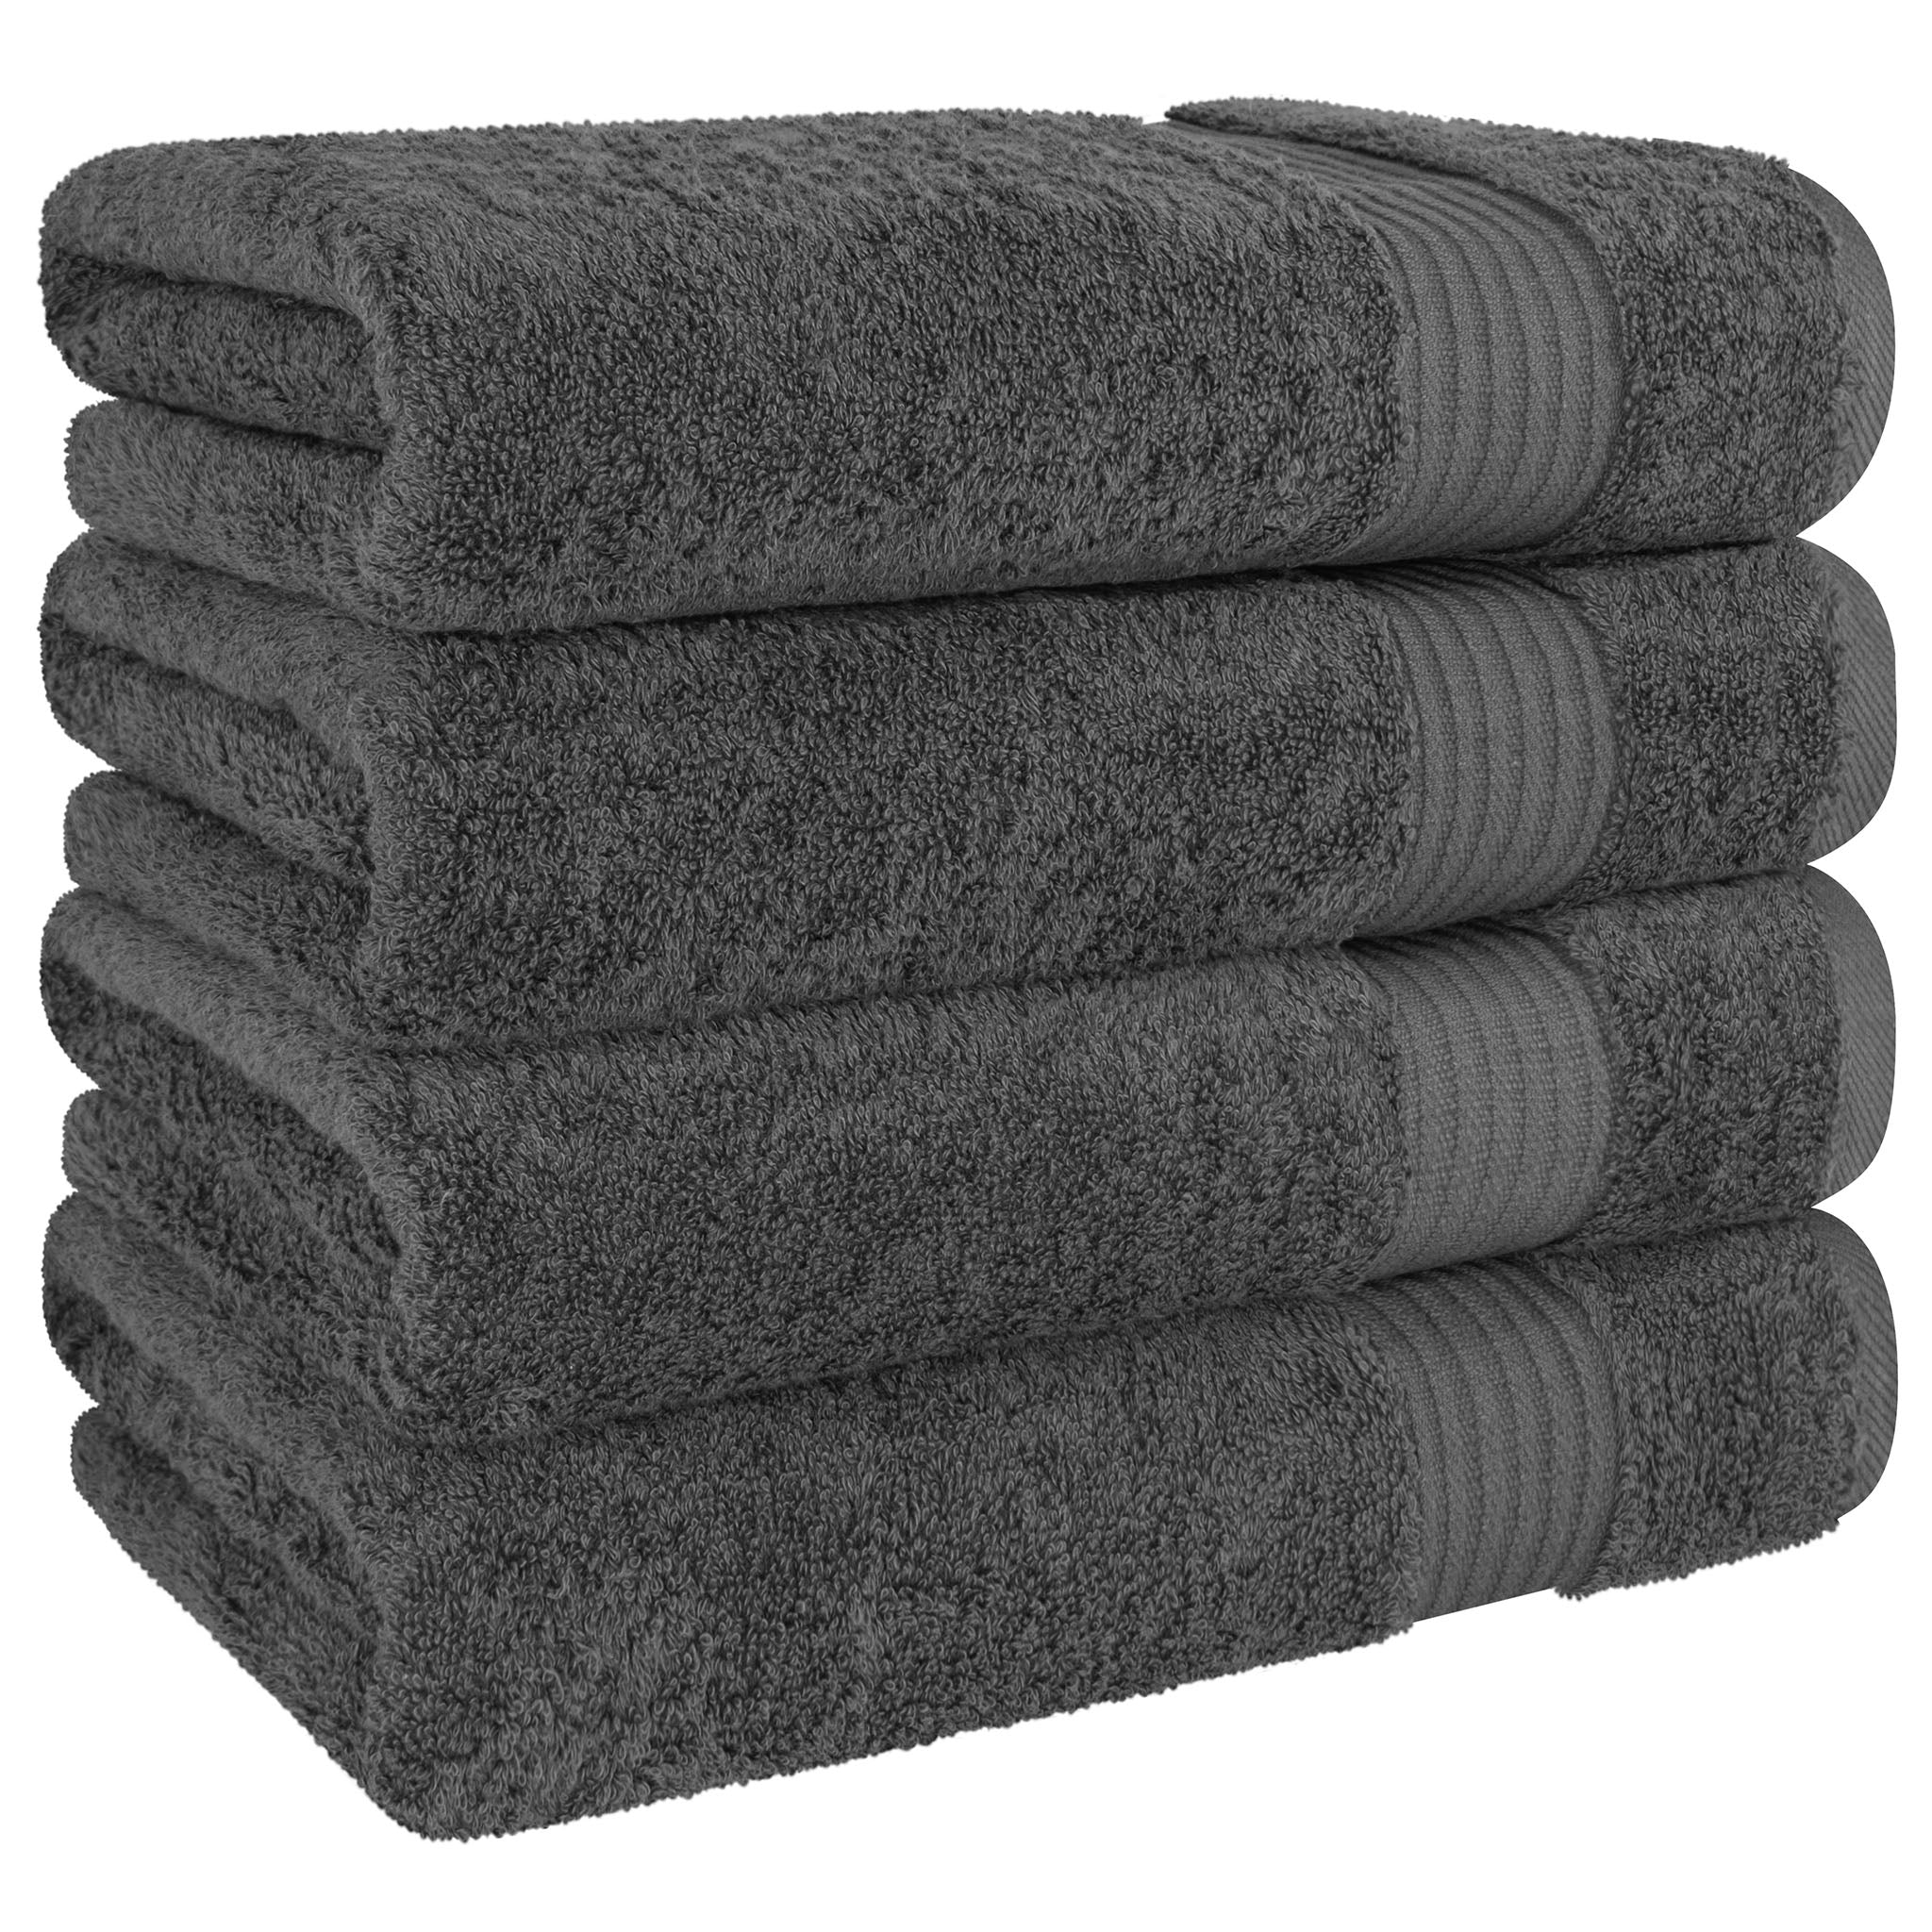 American Soft Linen Bekos 100% Cotton Turkish Towels, 4 Piece Bath Towel Set -gray-05